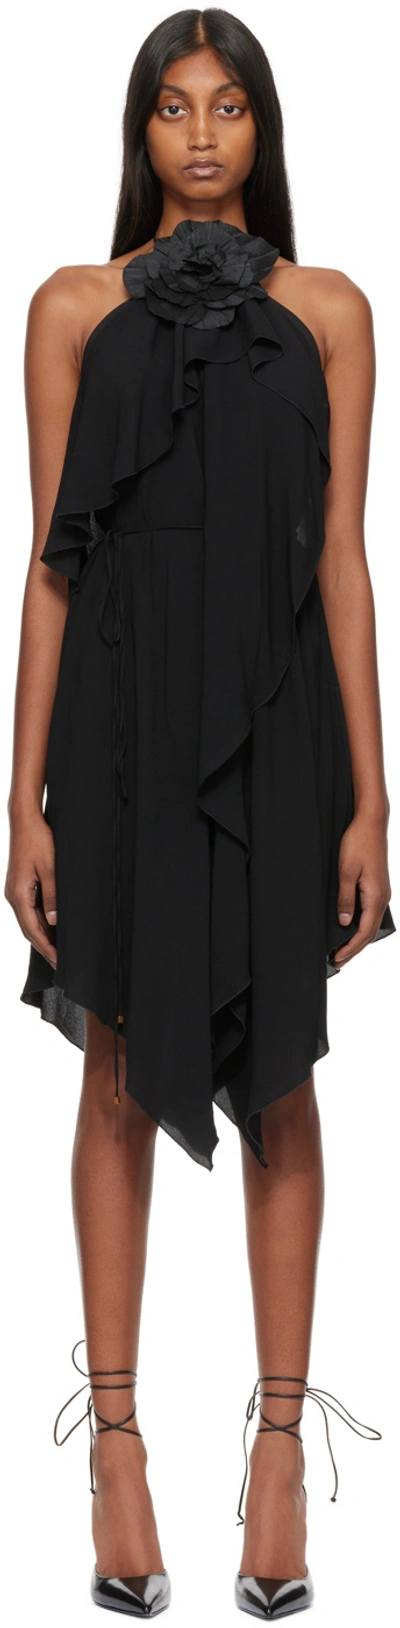 Blumarine Black Viscose Dress With Flower Brooch Detail Woman